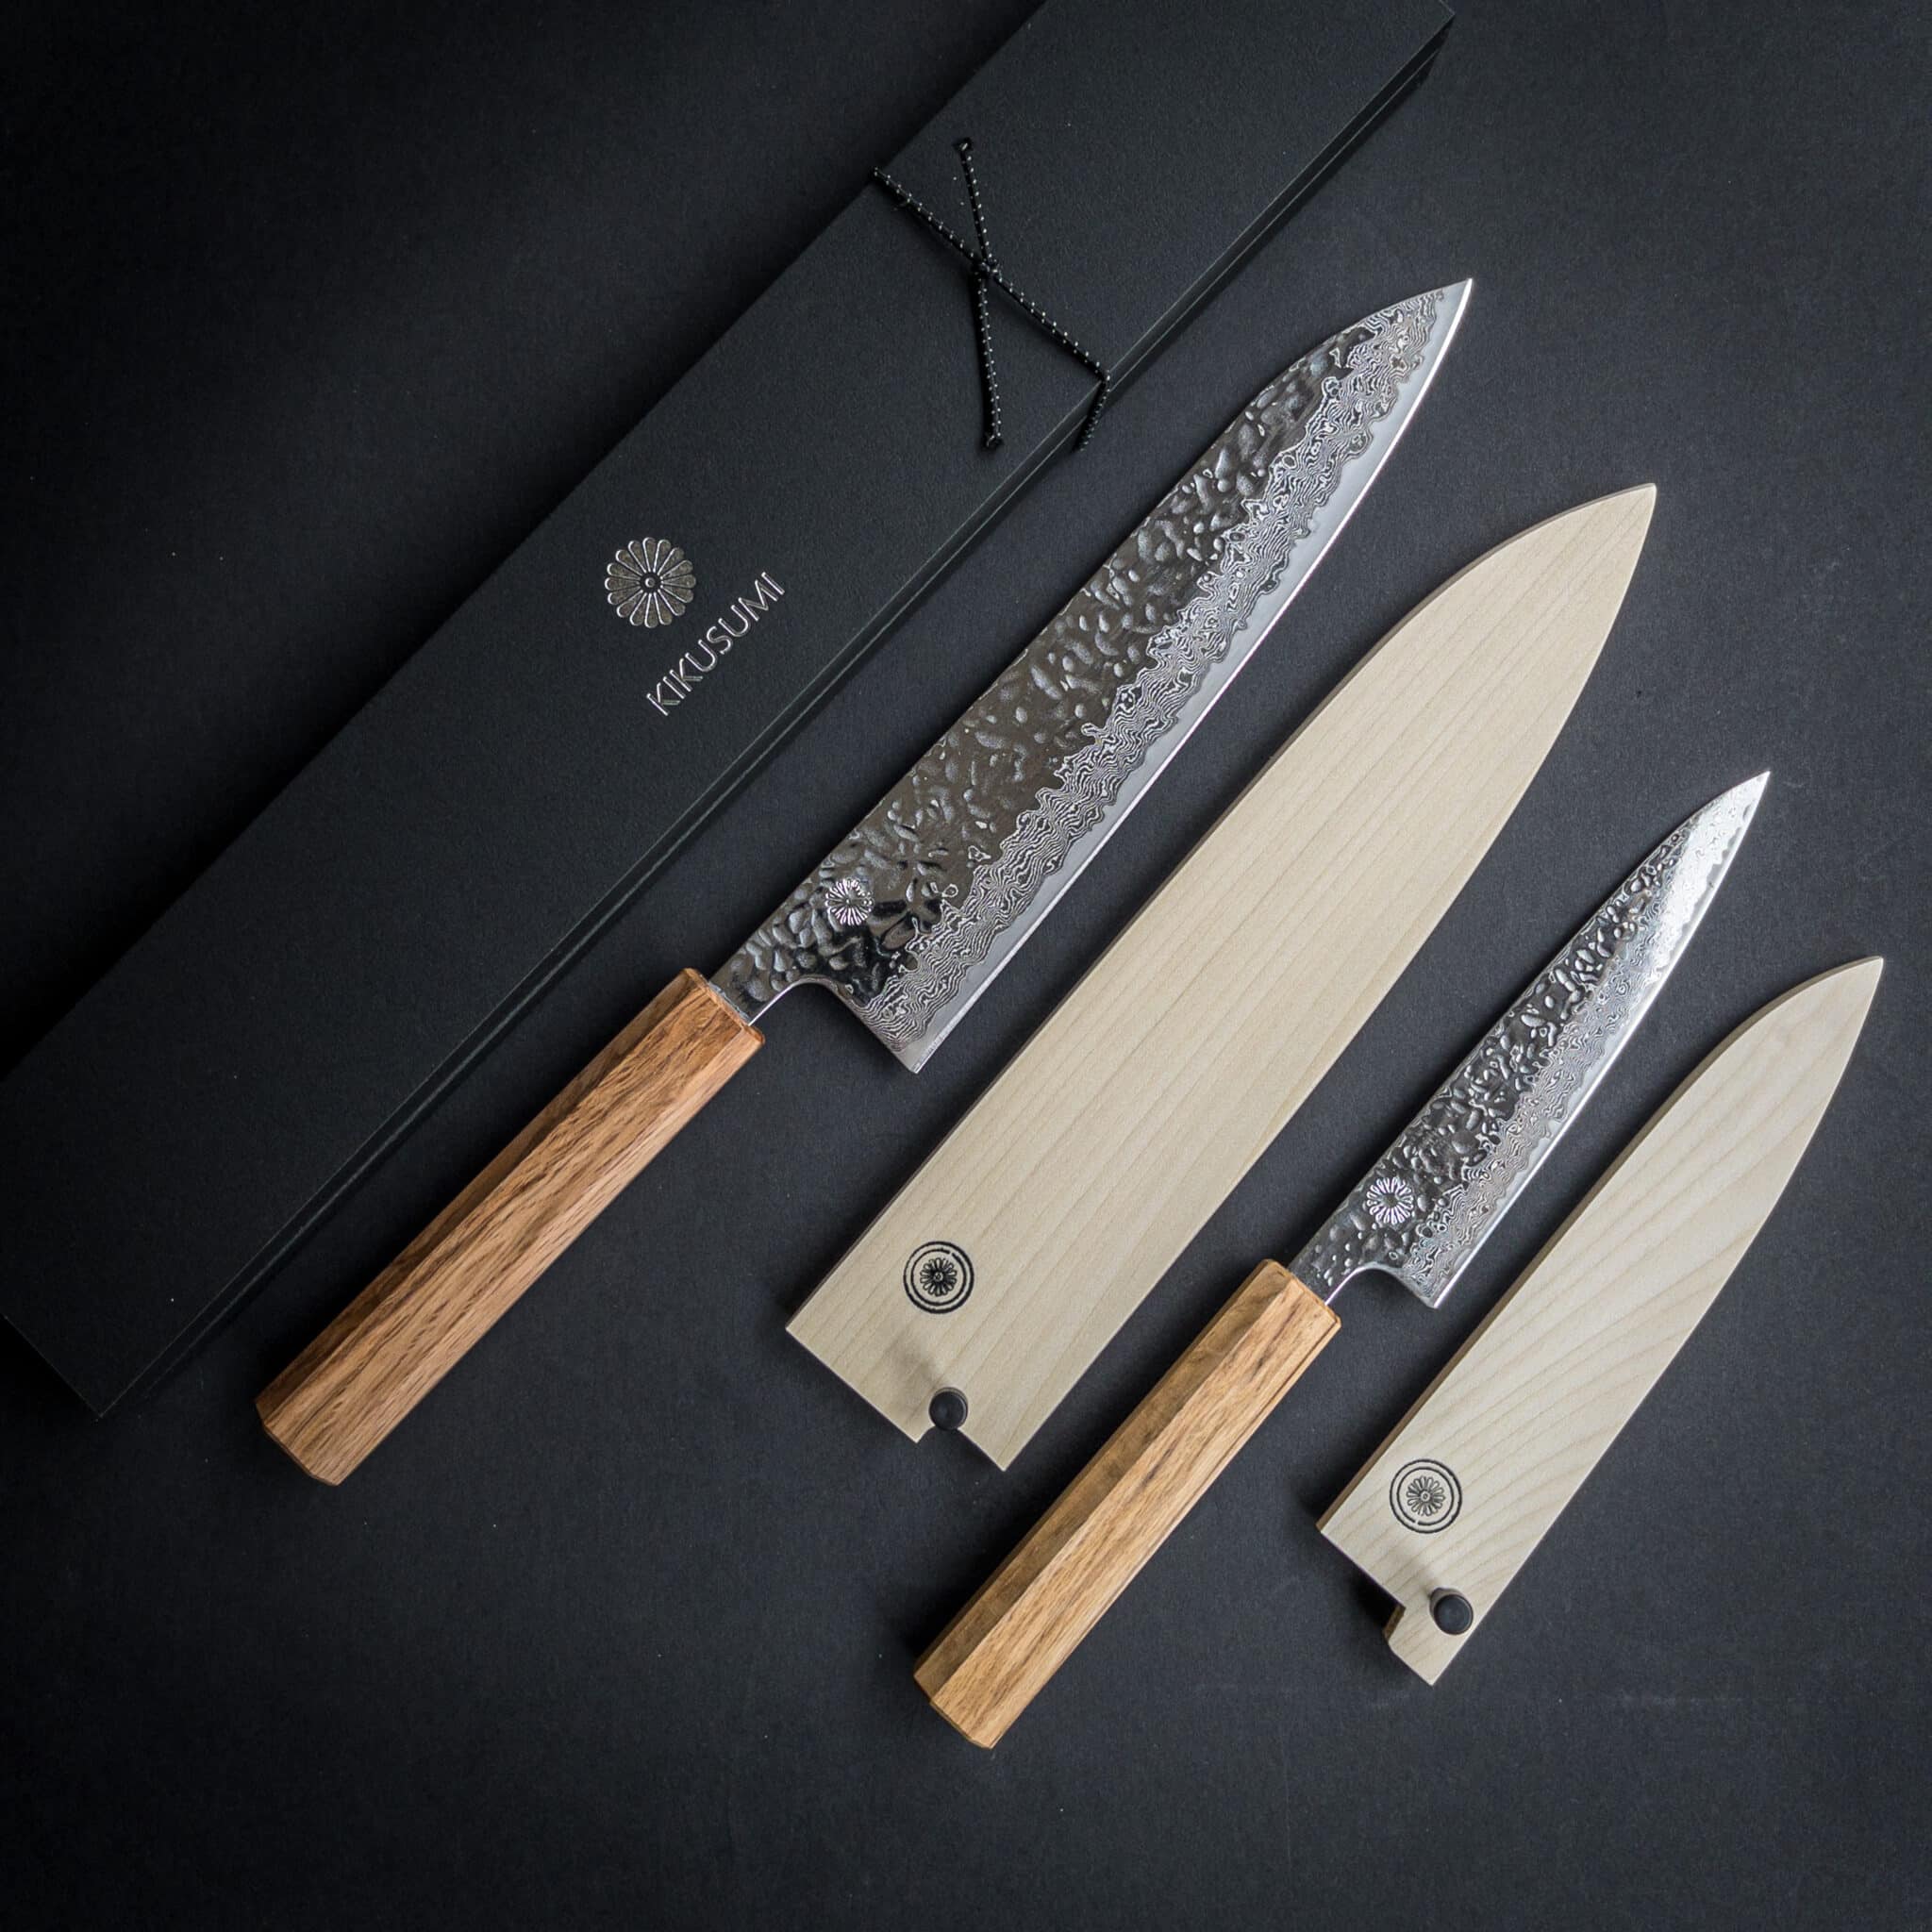 Kikusumi KATURA Kashi 2 Knife Gyuto Set – Damascus Steel Knife Tsuchime  Engraved - 8 Gyuto Chef + 5 Petty Japanese Oak Wa Handle - Kikusumi Knife  SHOP